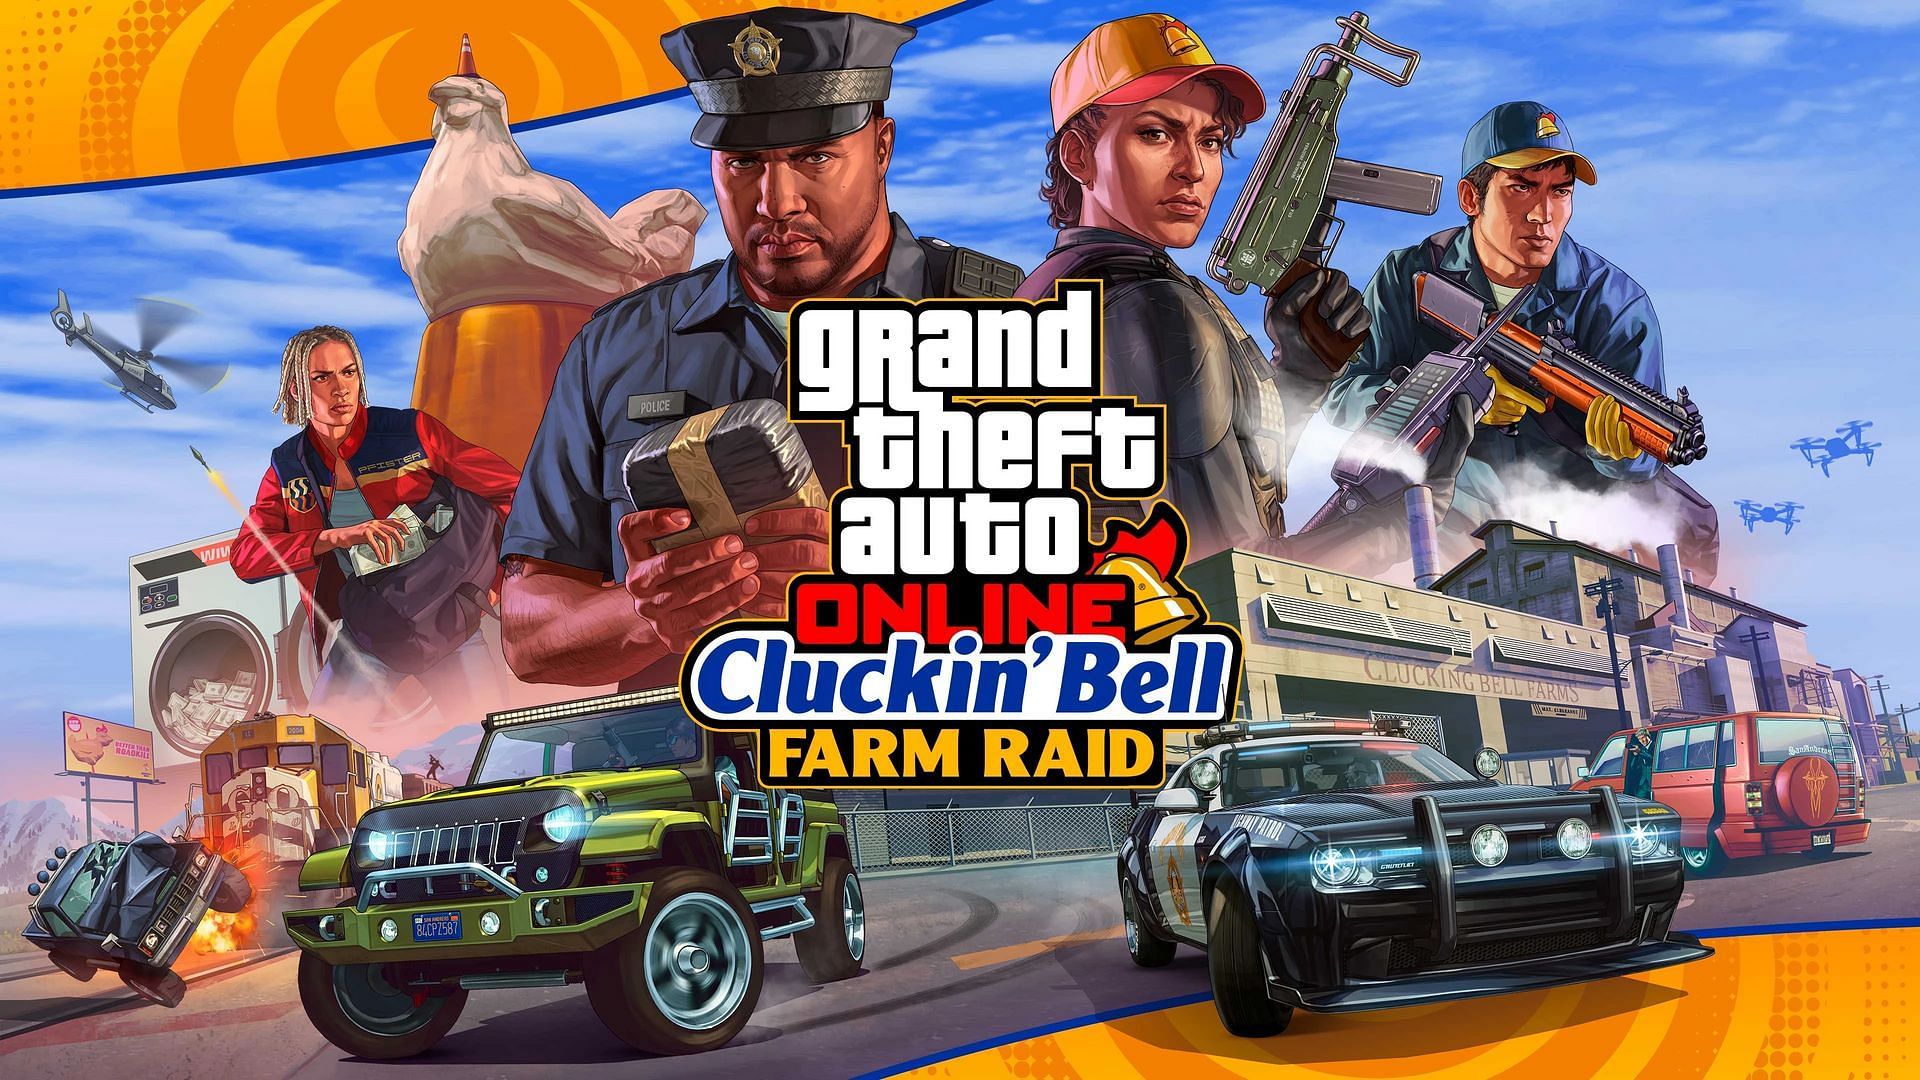 The Cluckin&#039; Bell Farm Raid is quite amazing in GTA Online (Image via Rockstar Games)